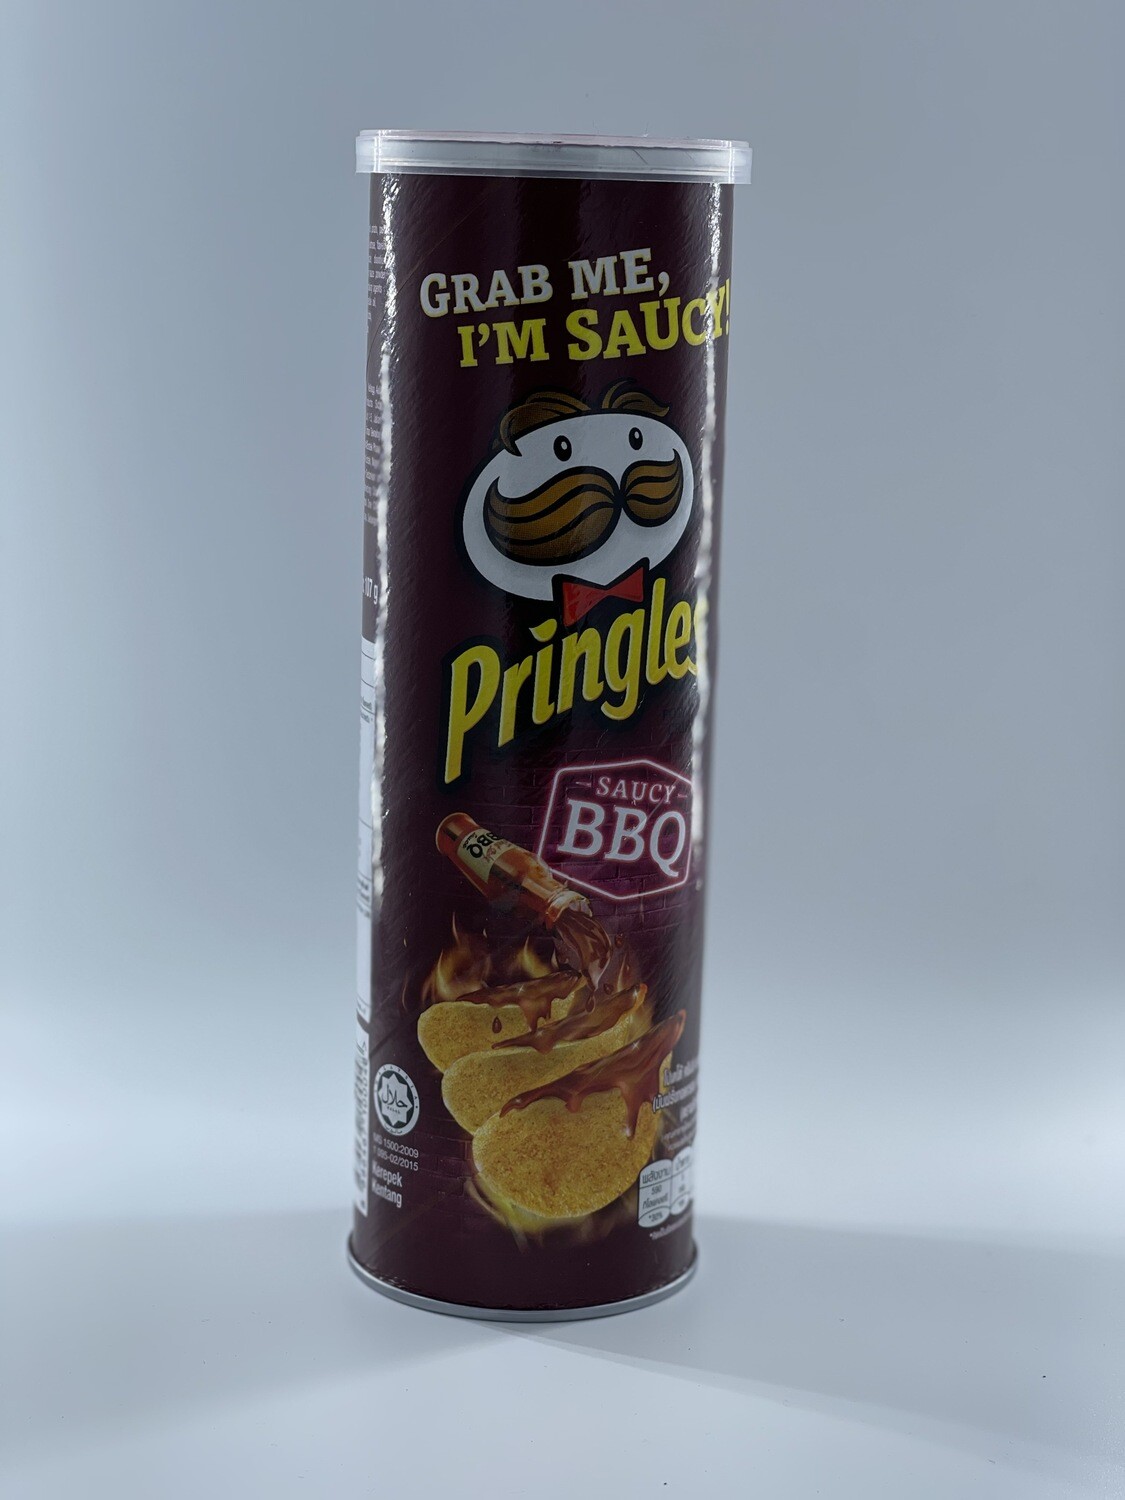 Pringles Saucy BBQ